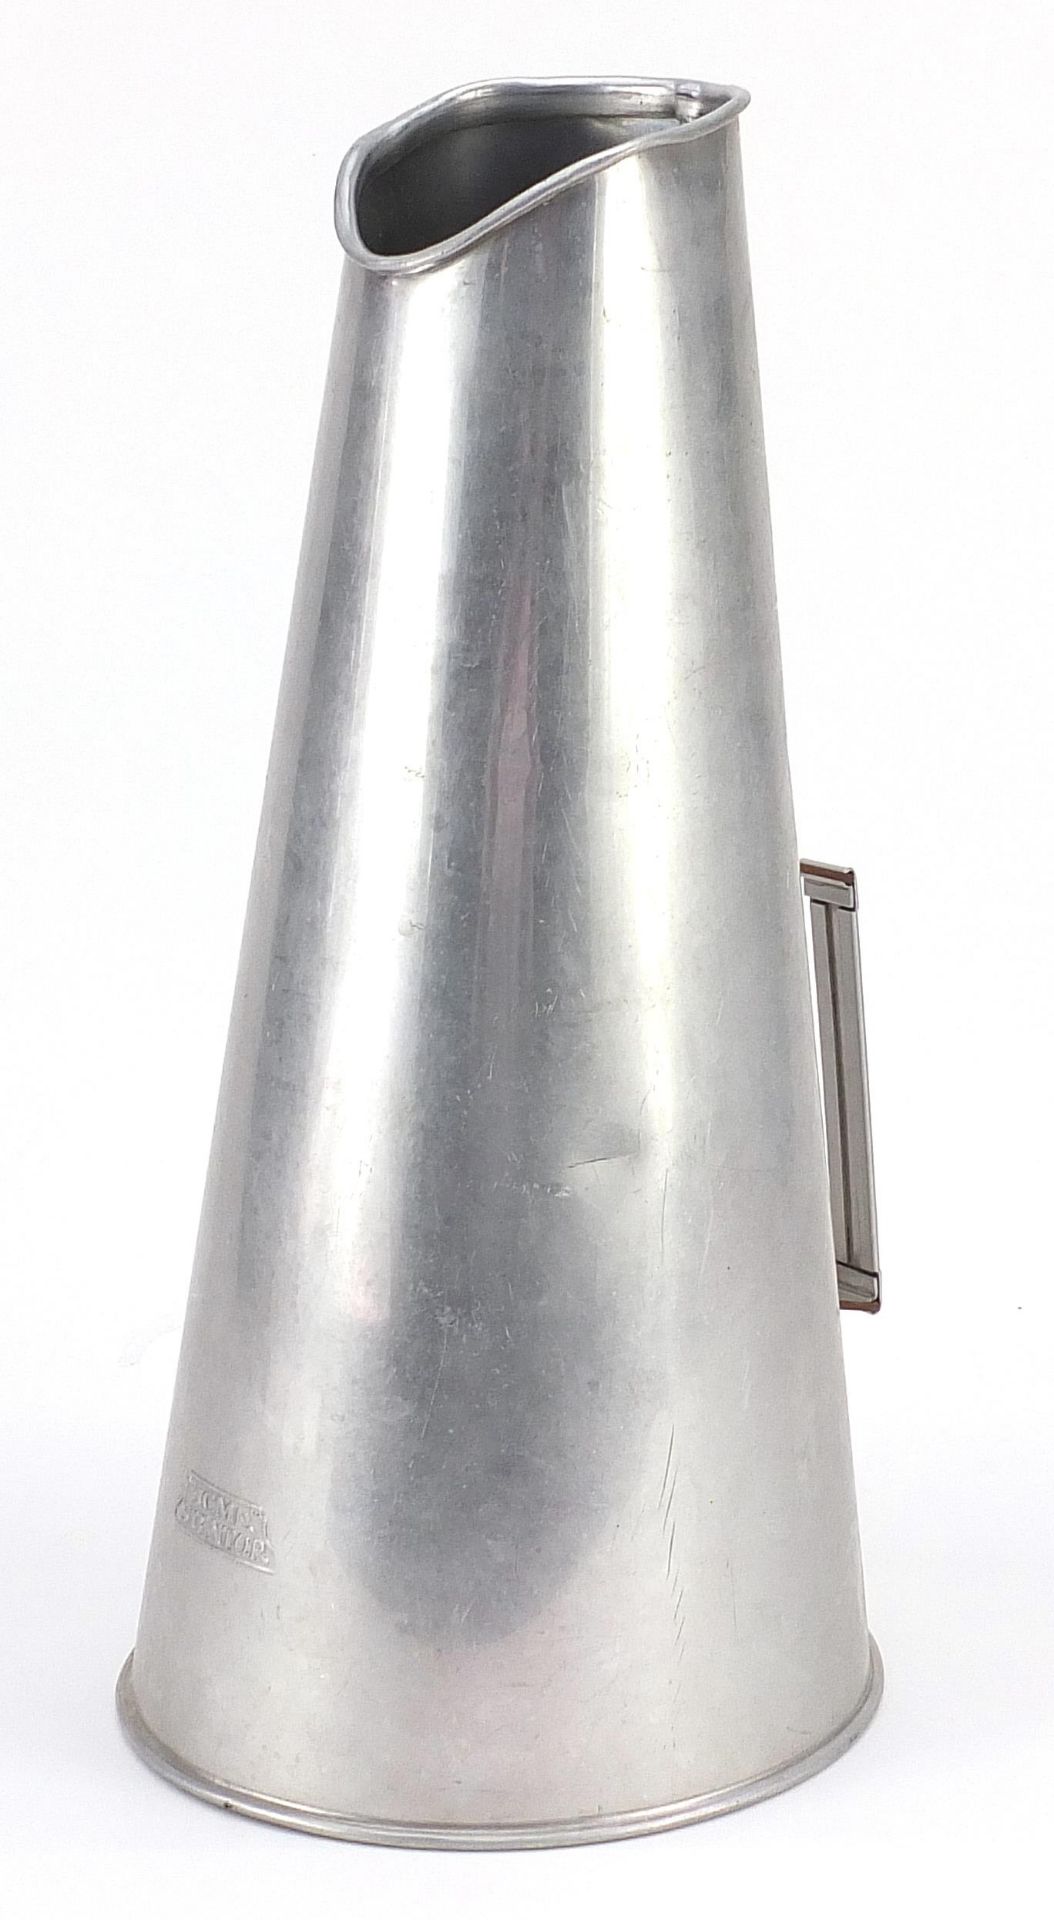 Vintage ACME Stentor loud hailer megaphone, 37cm in length